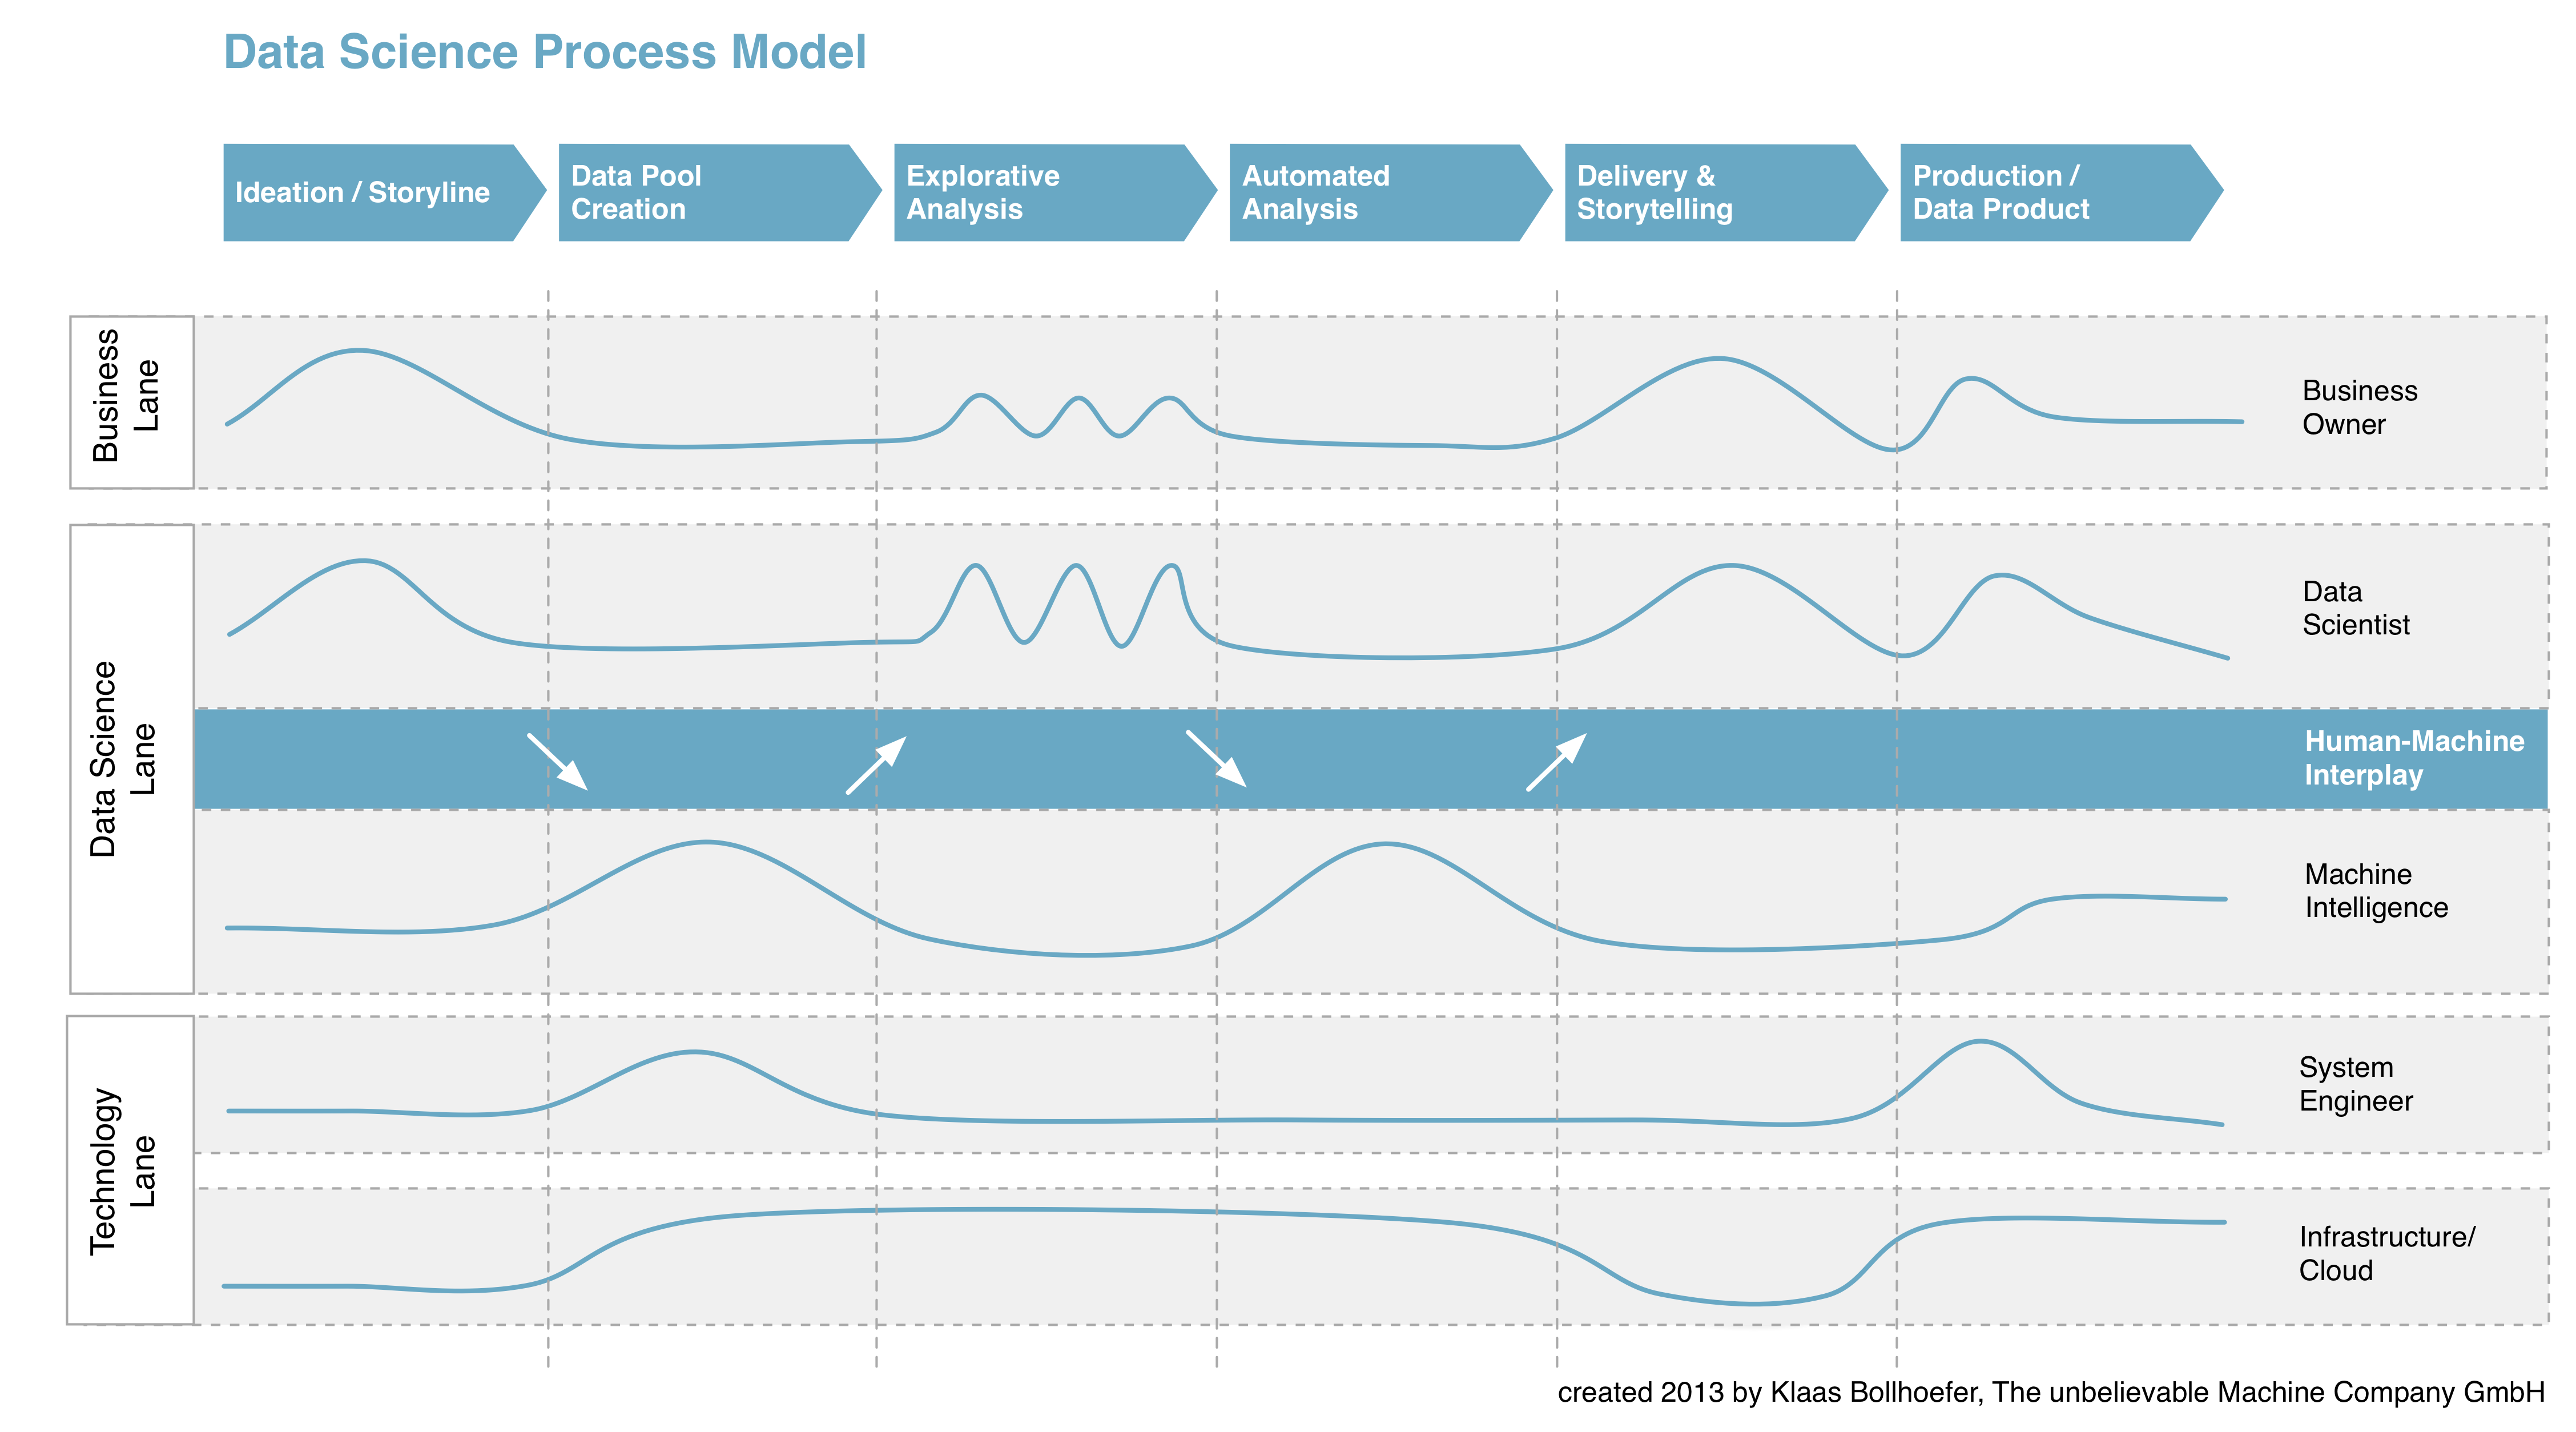 datascience process model